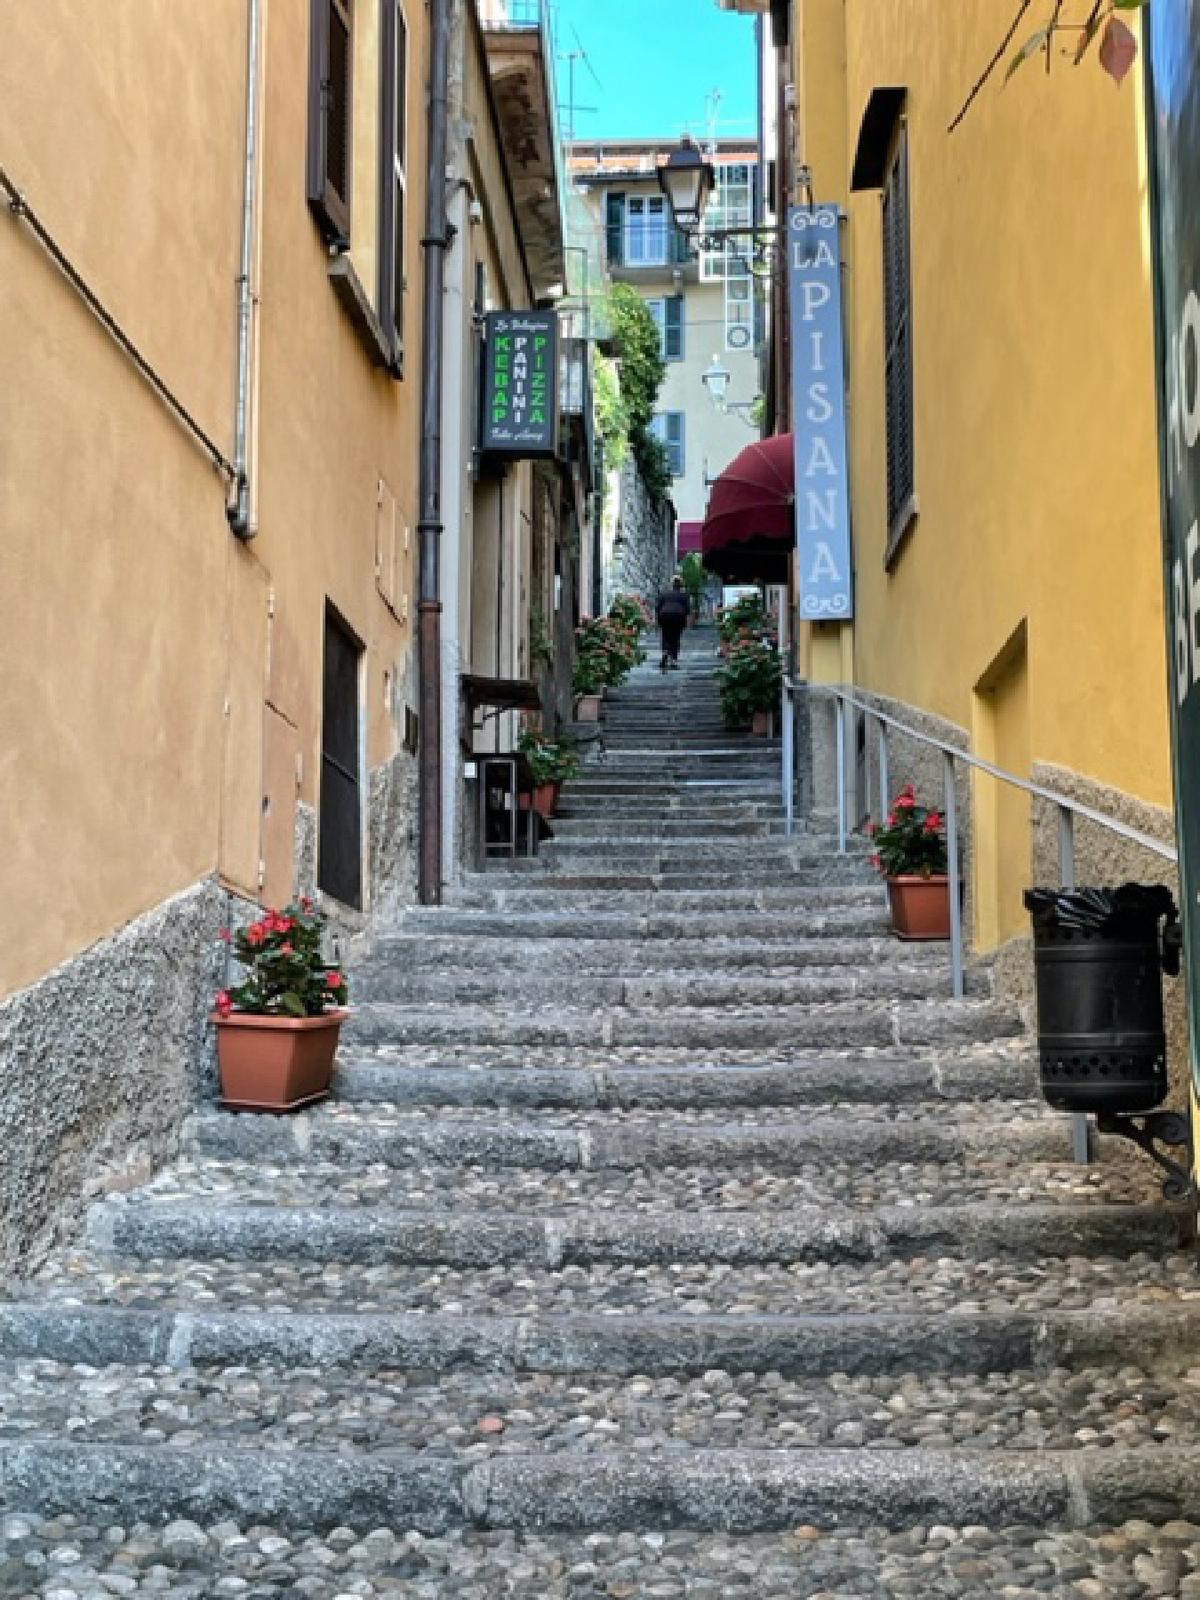 Steep walkways are vital in Italy’s Lake Como to defy the massive mountains that border the lake. (Courtesy of Halina Kubalski)